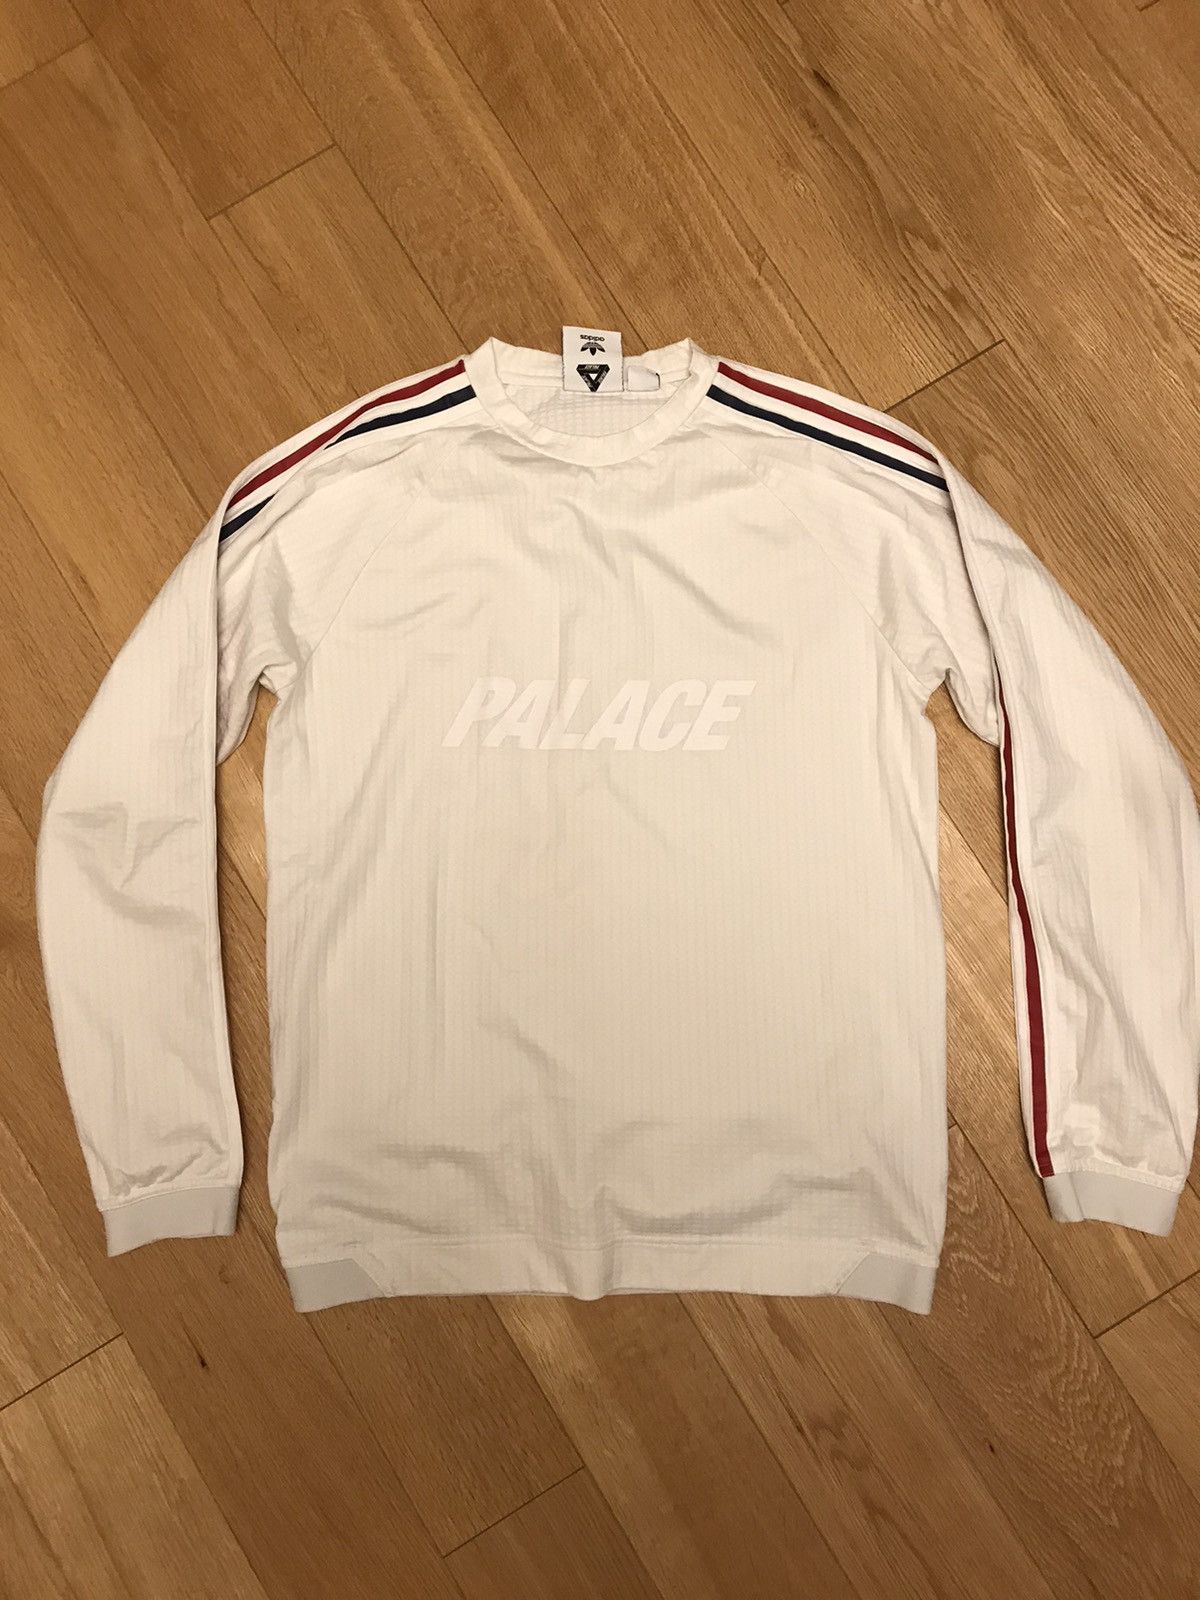 Adidas Adidas x Palace sweatshirt Size US S / EU 44-46 / 1 - 1 Preview